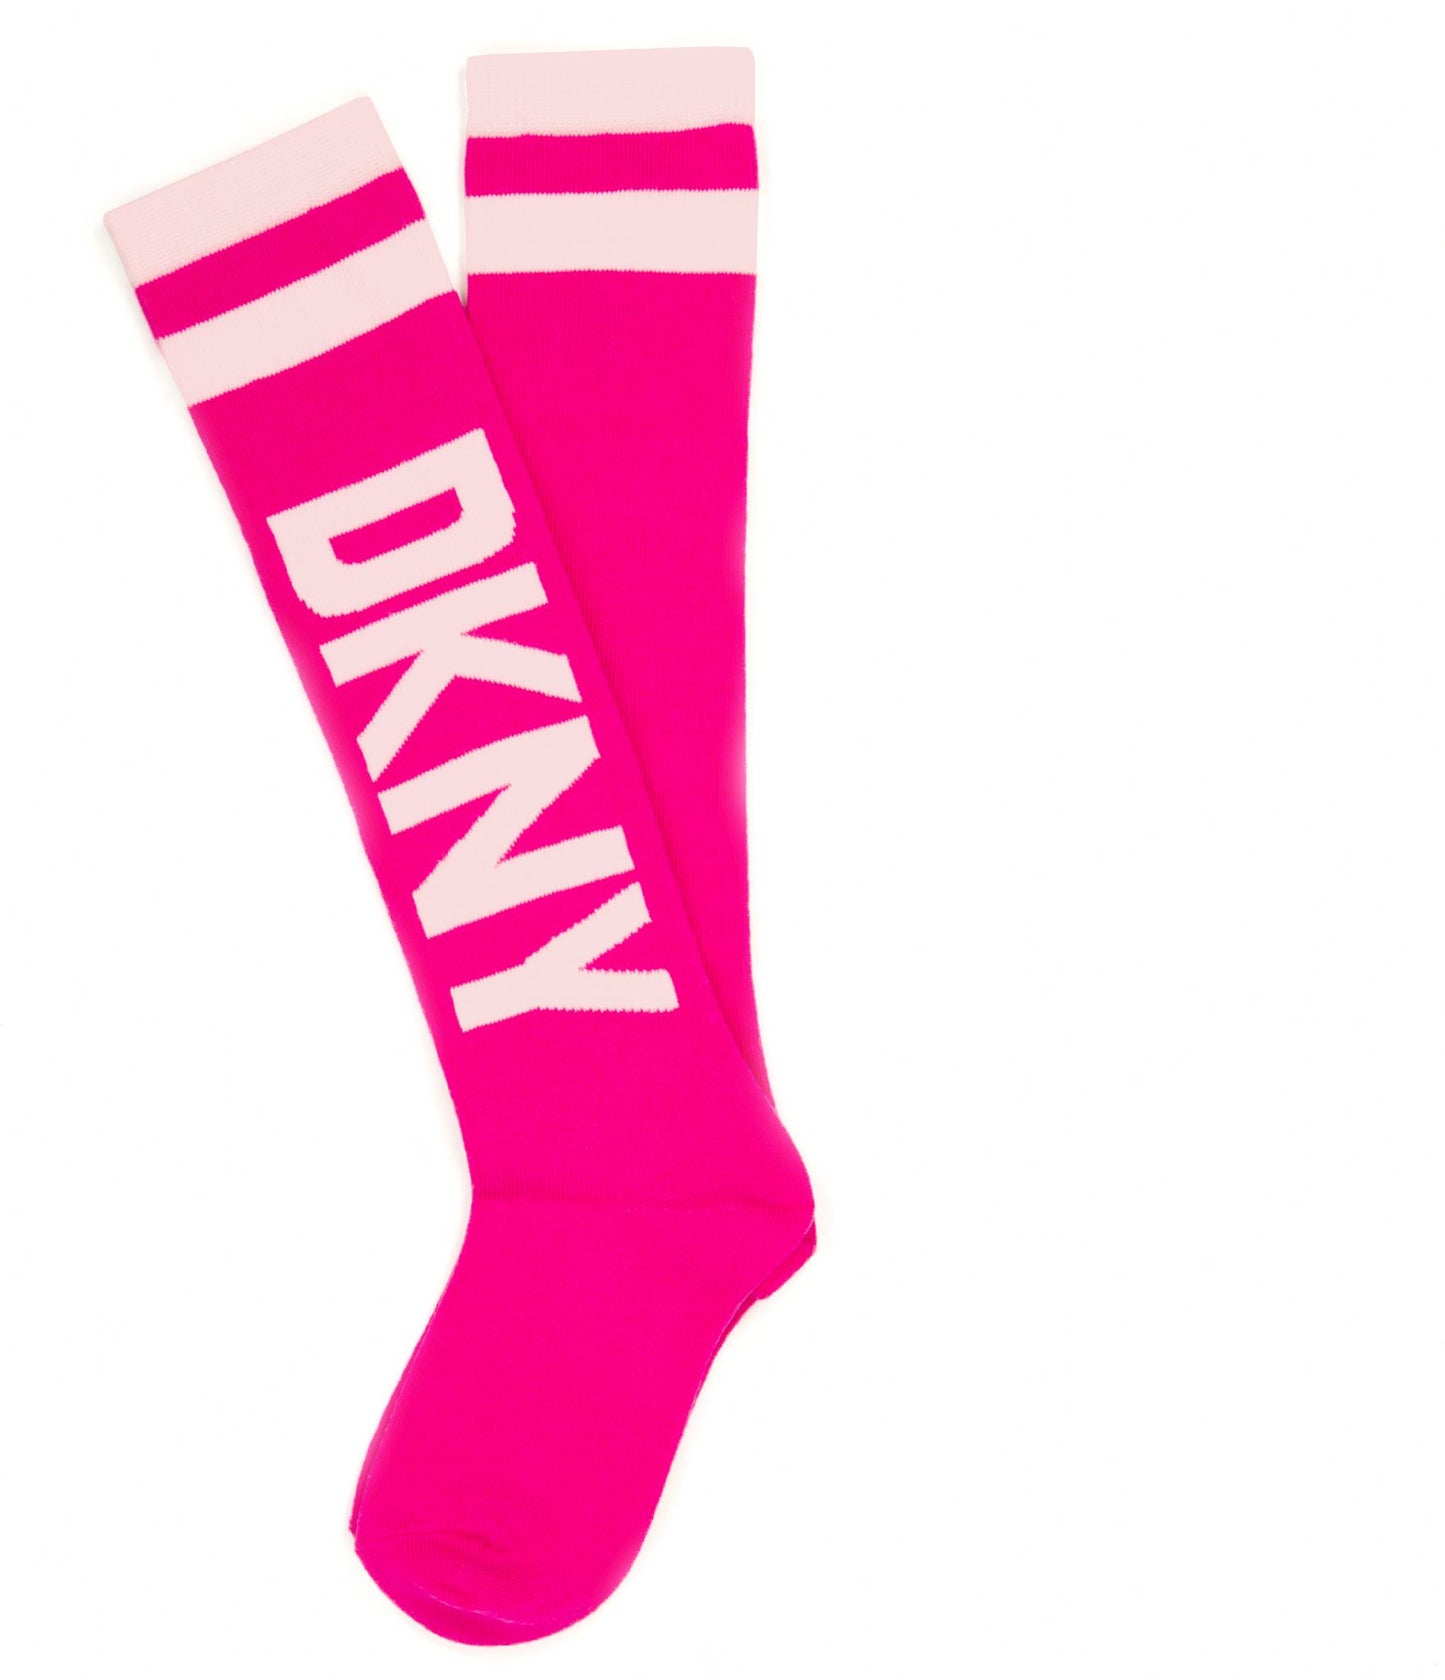 DKNY Girls Fushia Knee High Socks